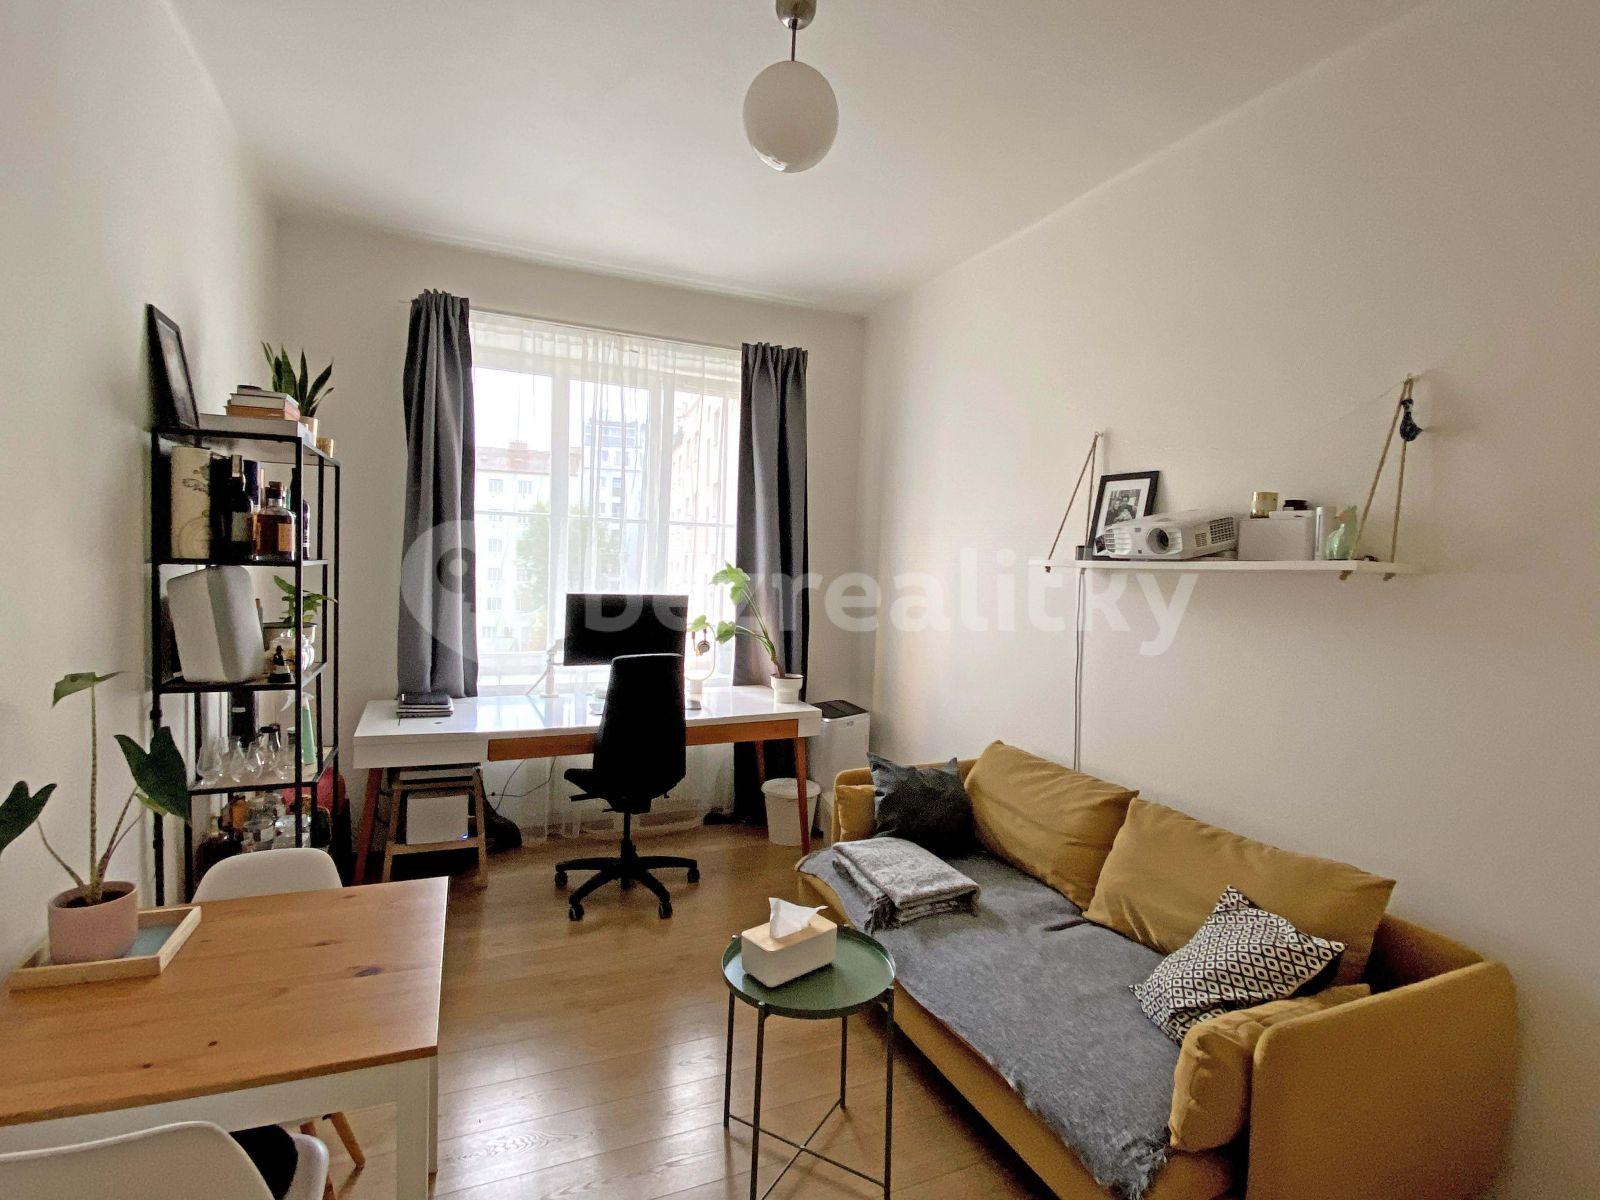 1 bedroom with open-plan kitchen flat to rent, 50 m², Sportovní, Prague, Prague